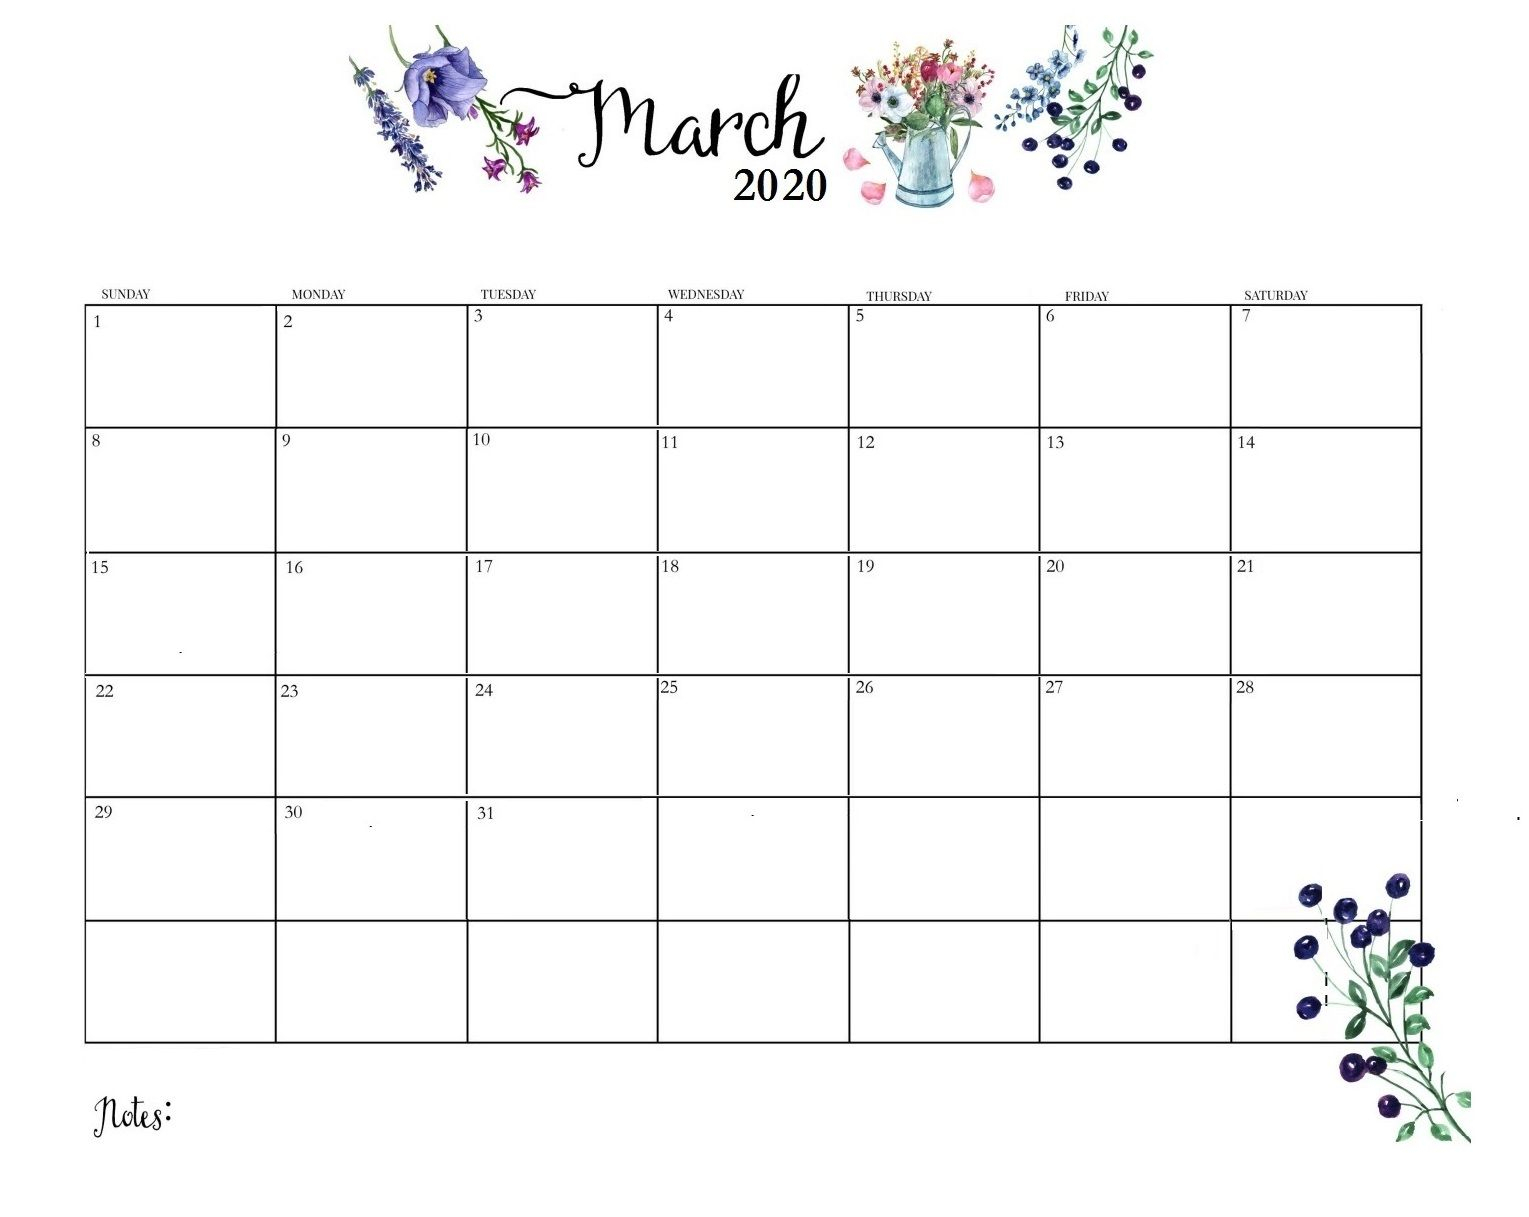 Free March 2020 Floral Calendar In 2020 | December